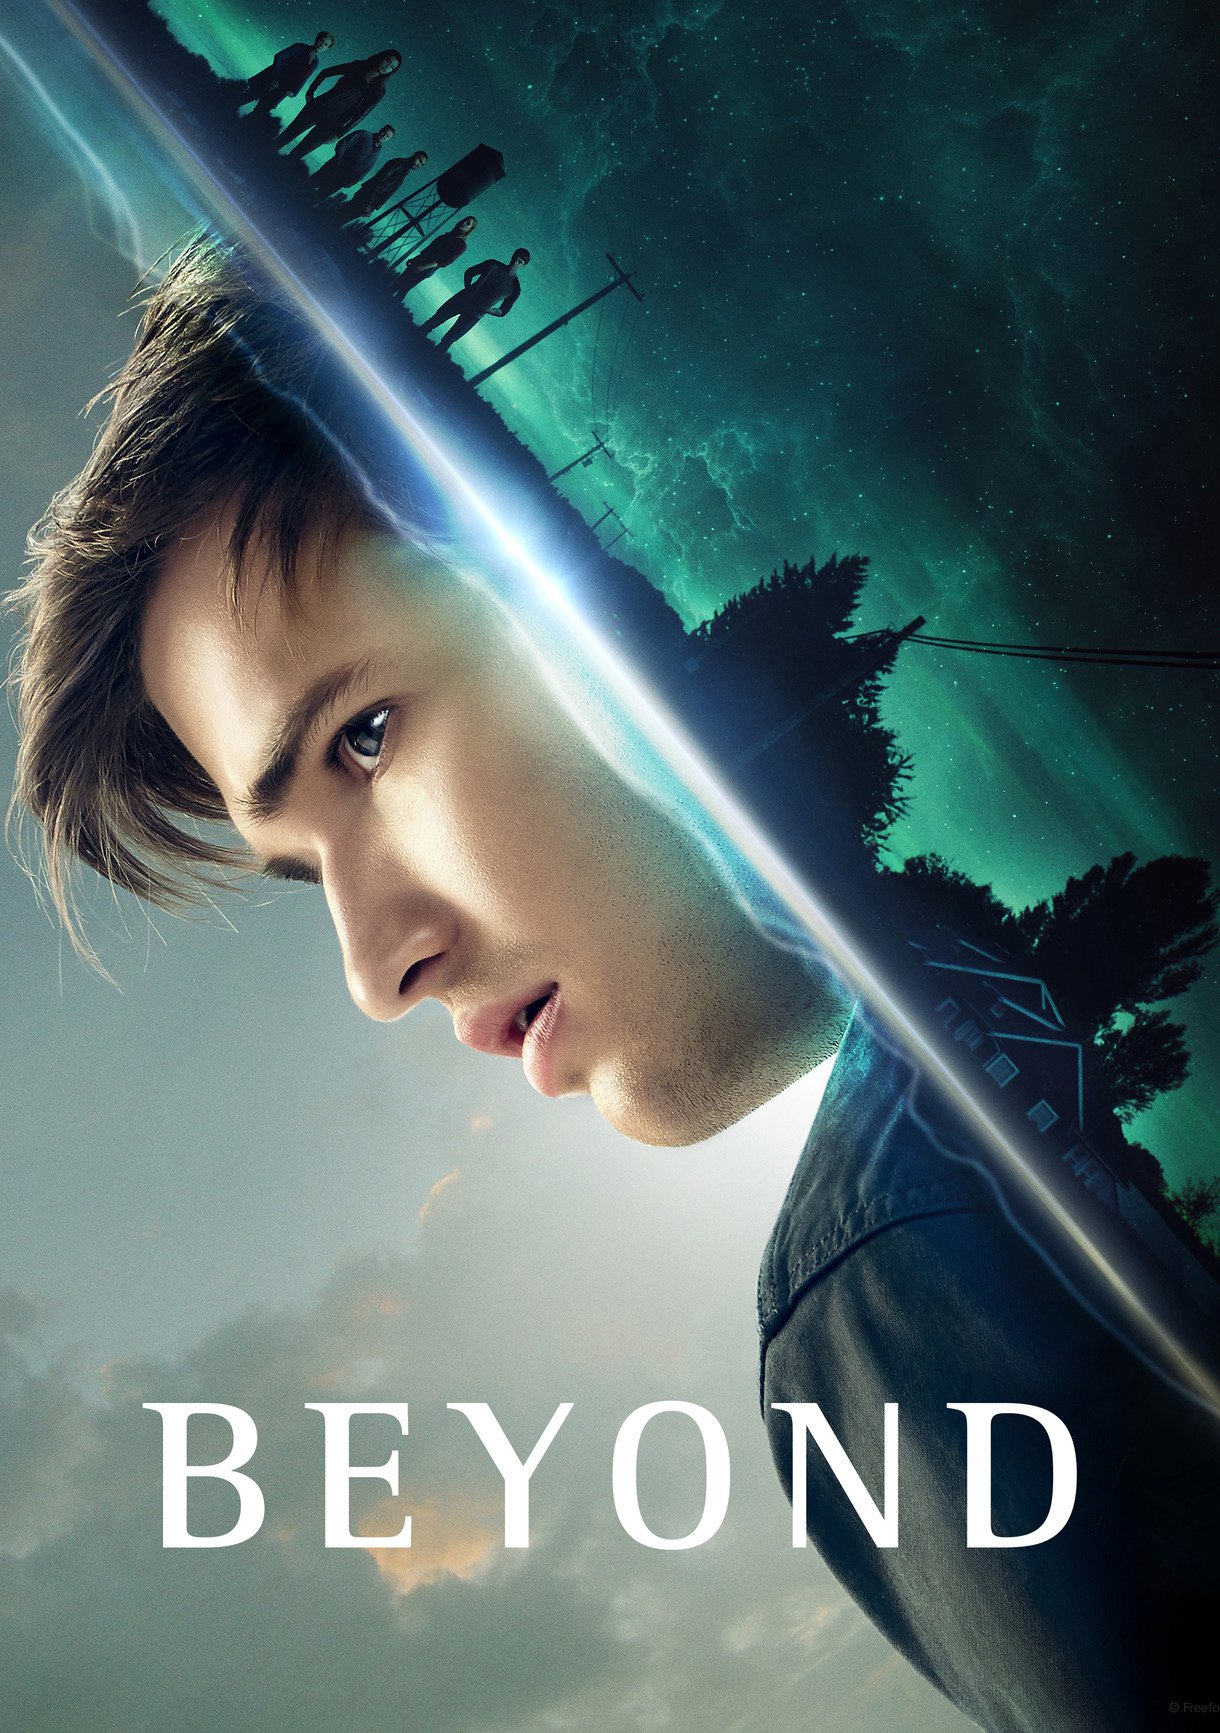 world beyond season 2 release date